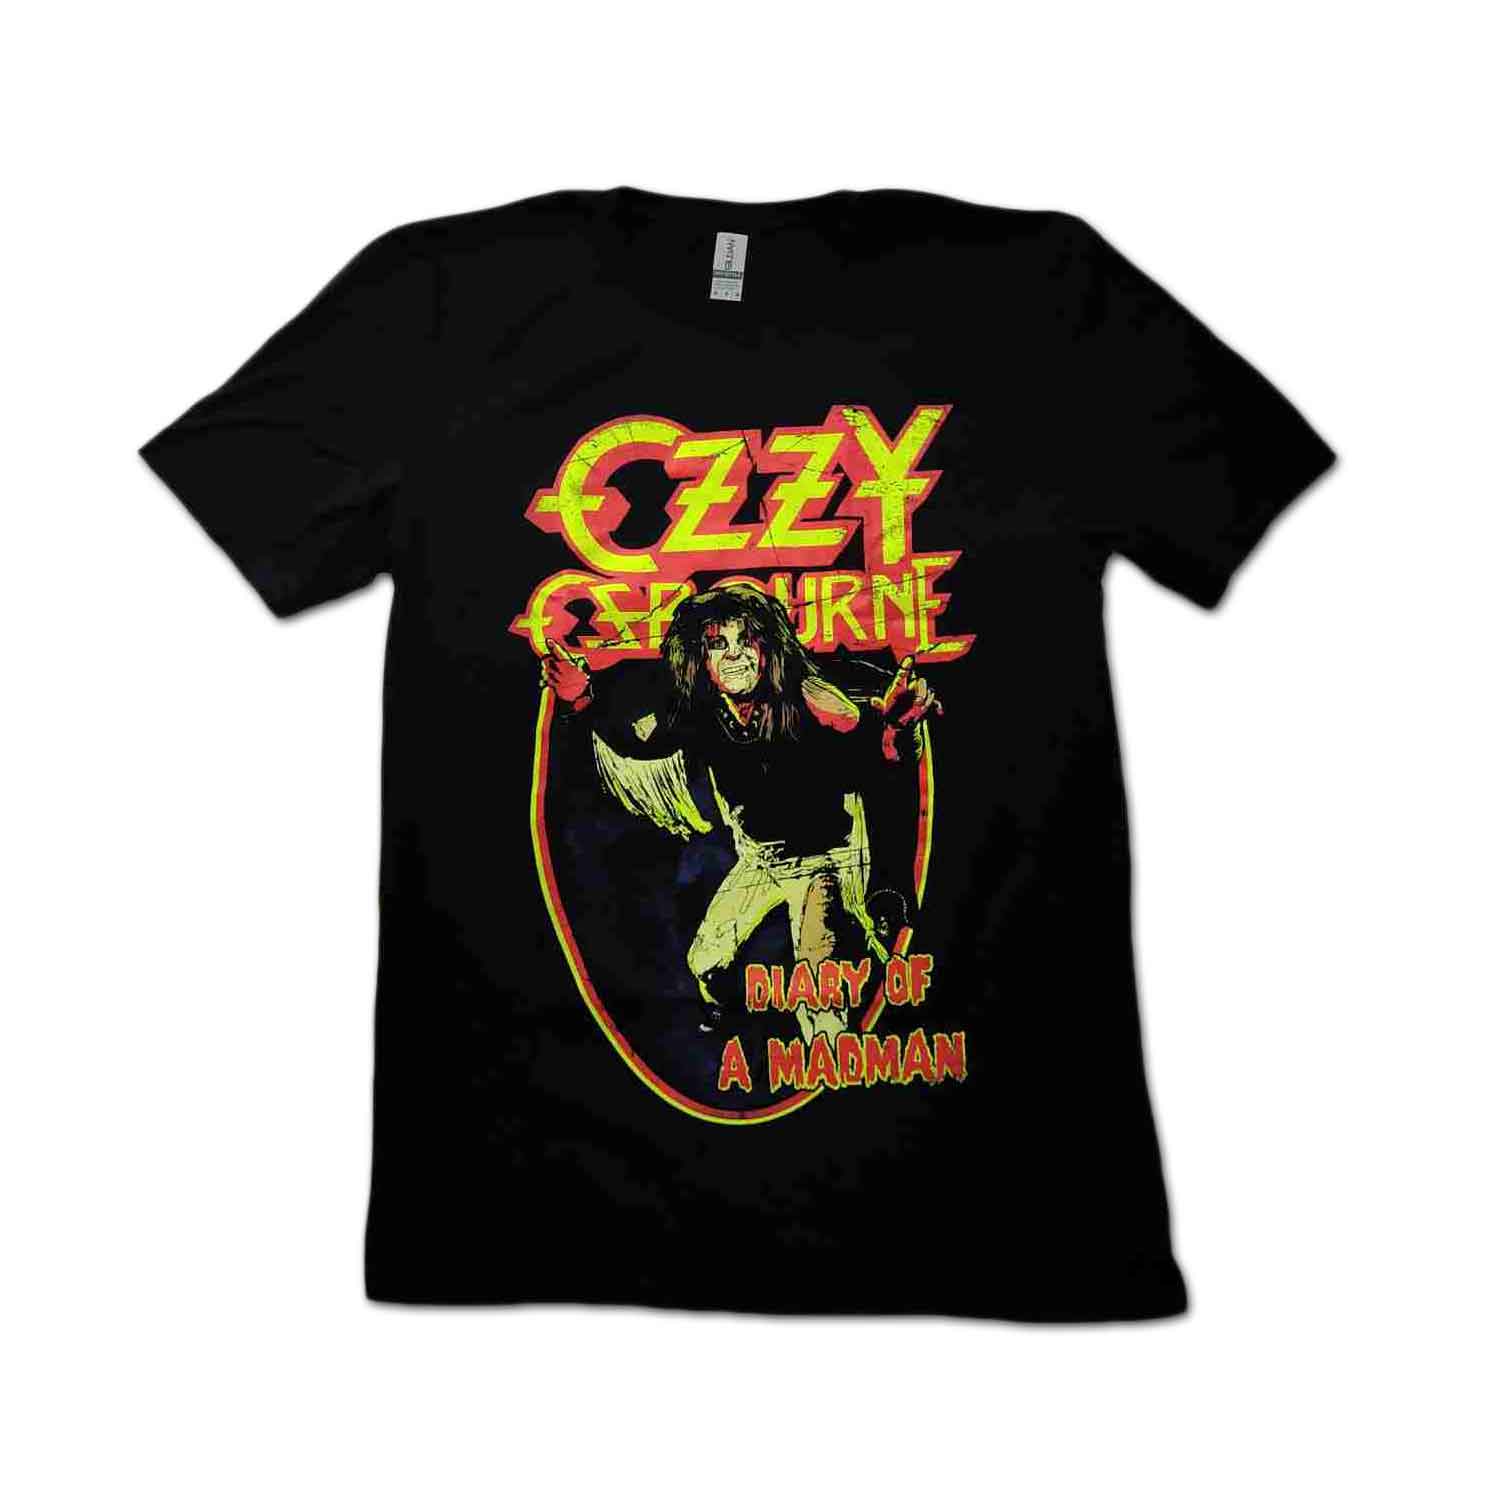 Ozzy Osbourne Tシャツ オジー・オズボーン Diary Of A Madman